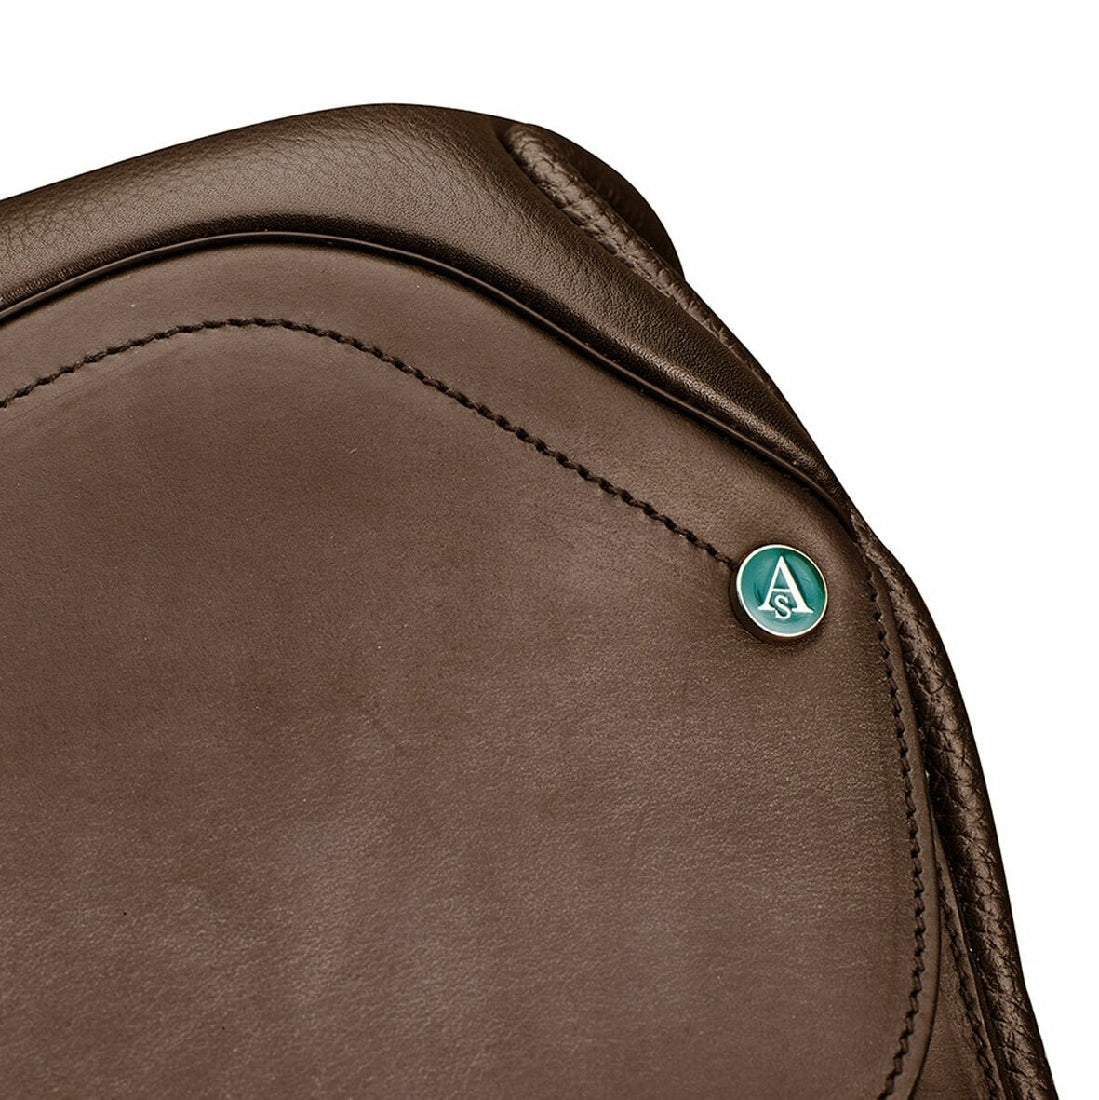 Close-up of an Arena Saddles brown leather saddle with logo pin.